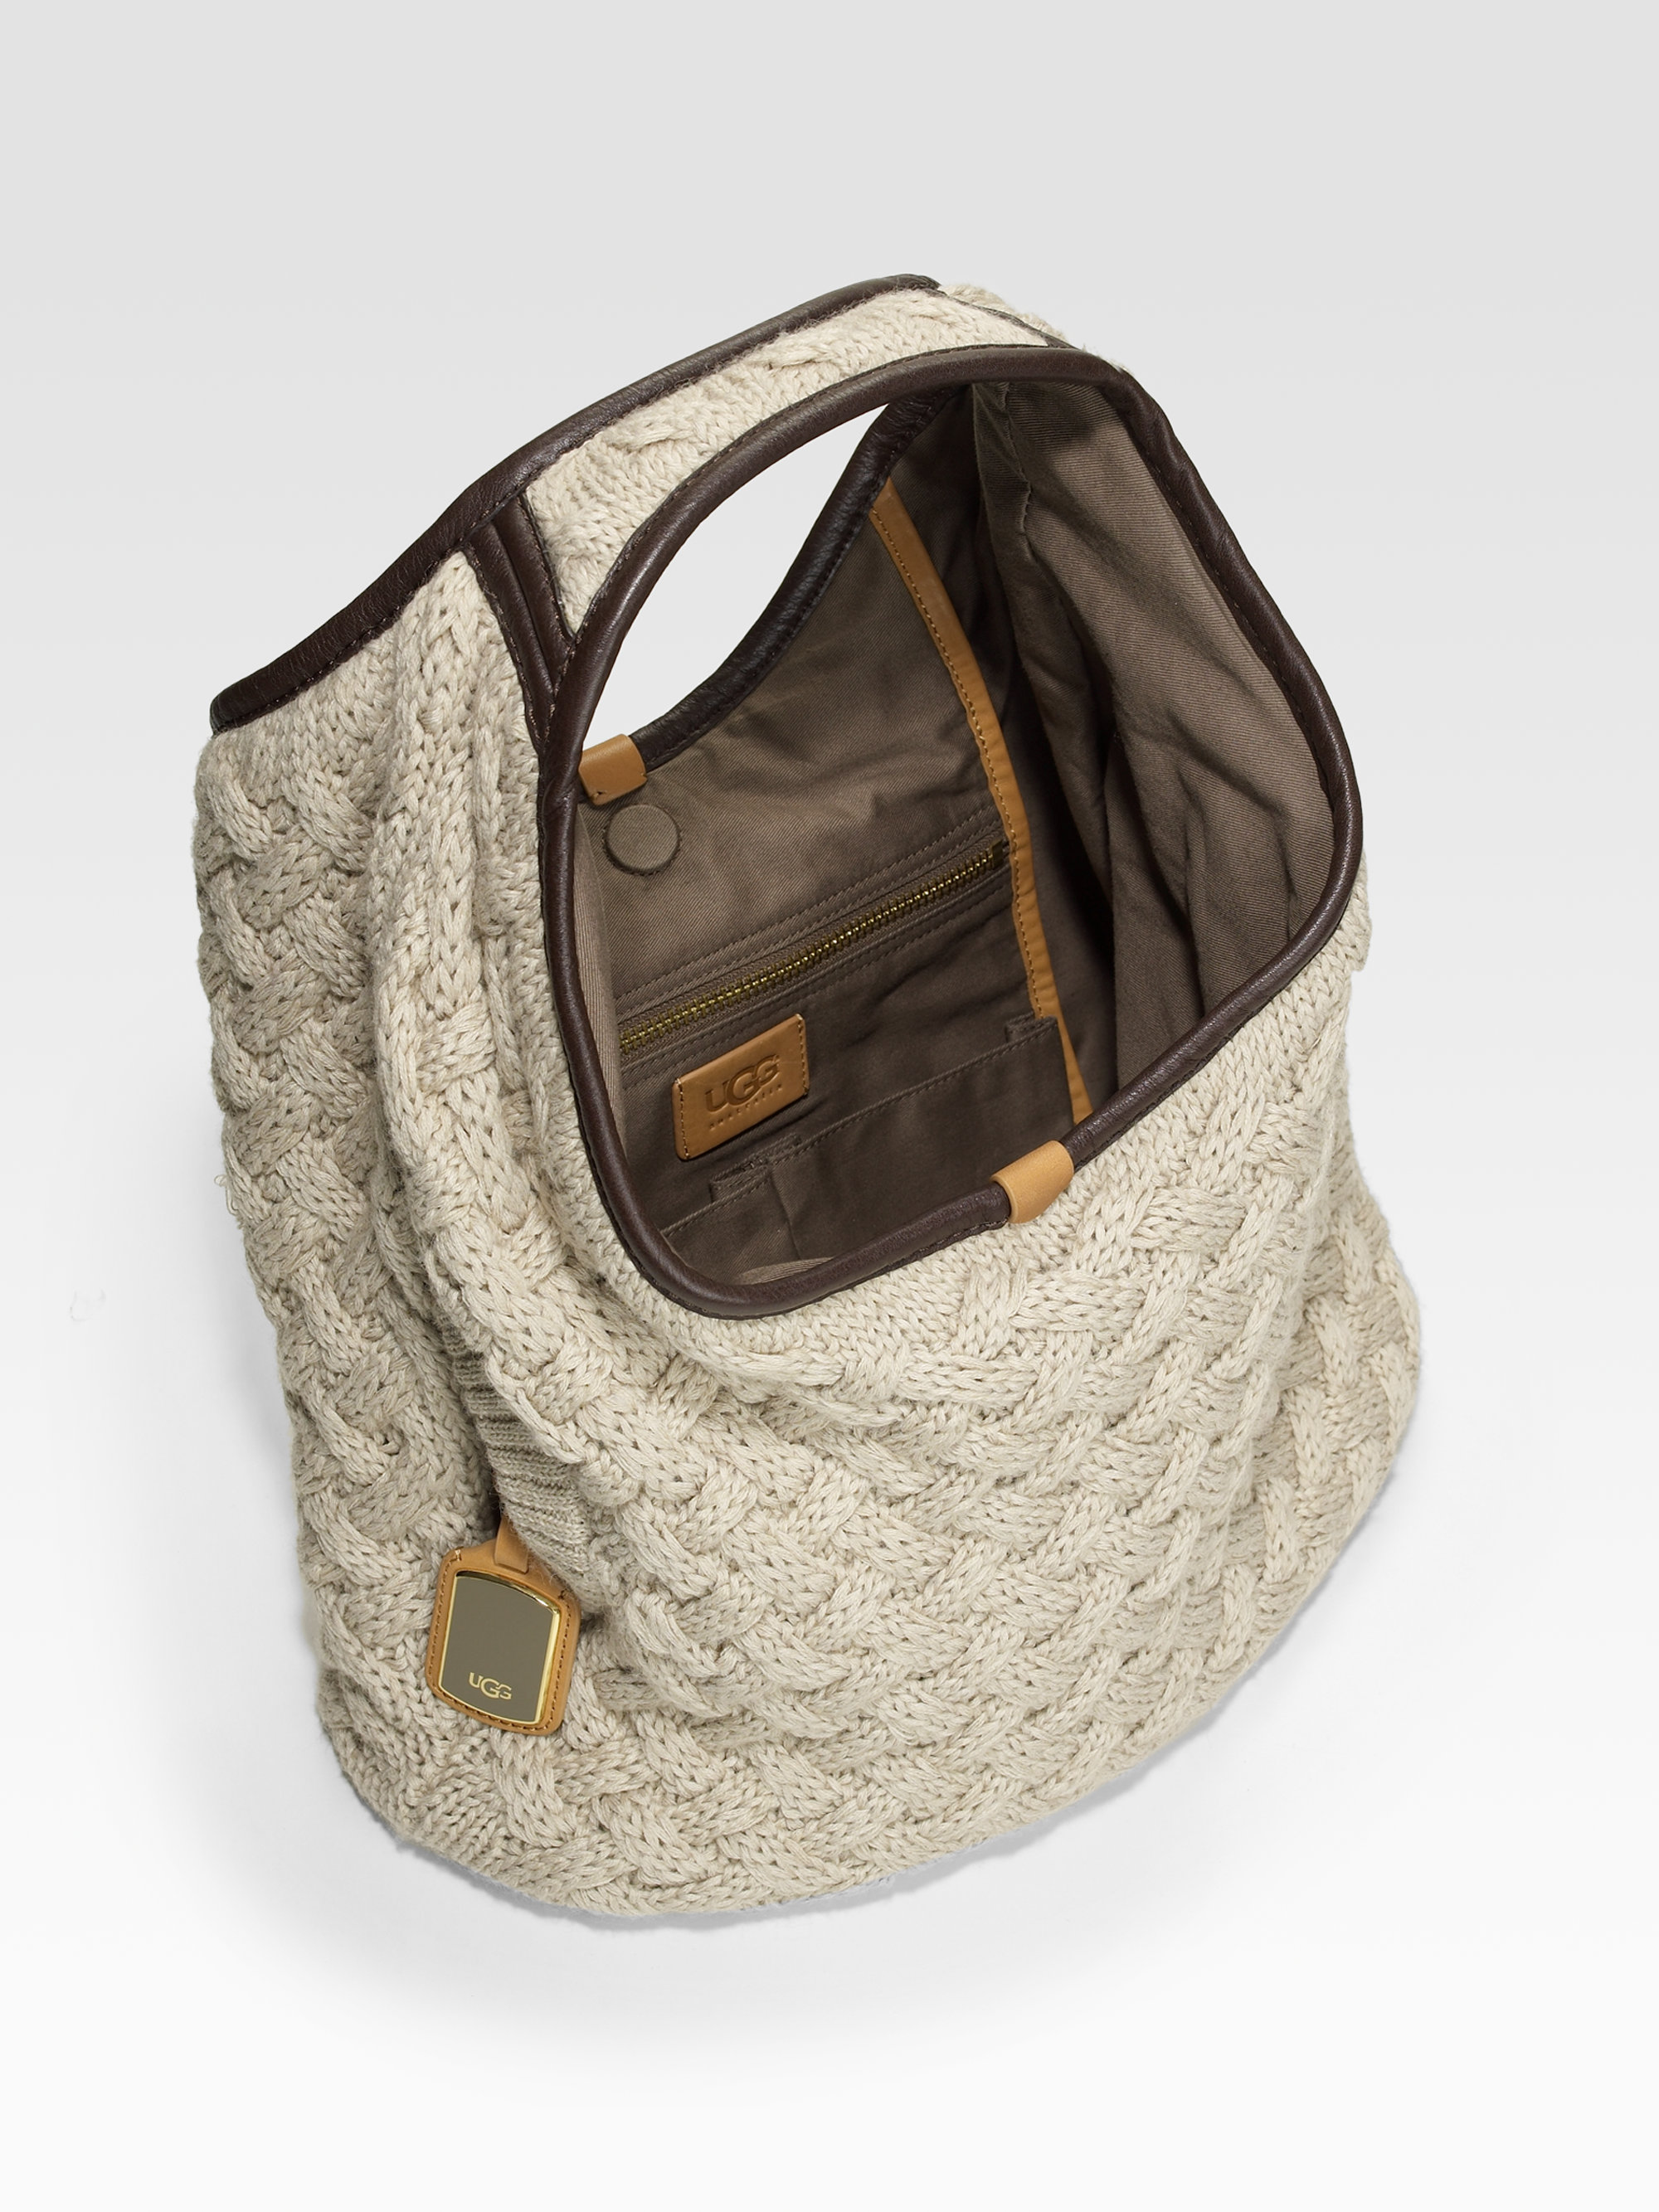 UGG Knit Wool Hobo Bag in Beige (Natural) - Lyst